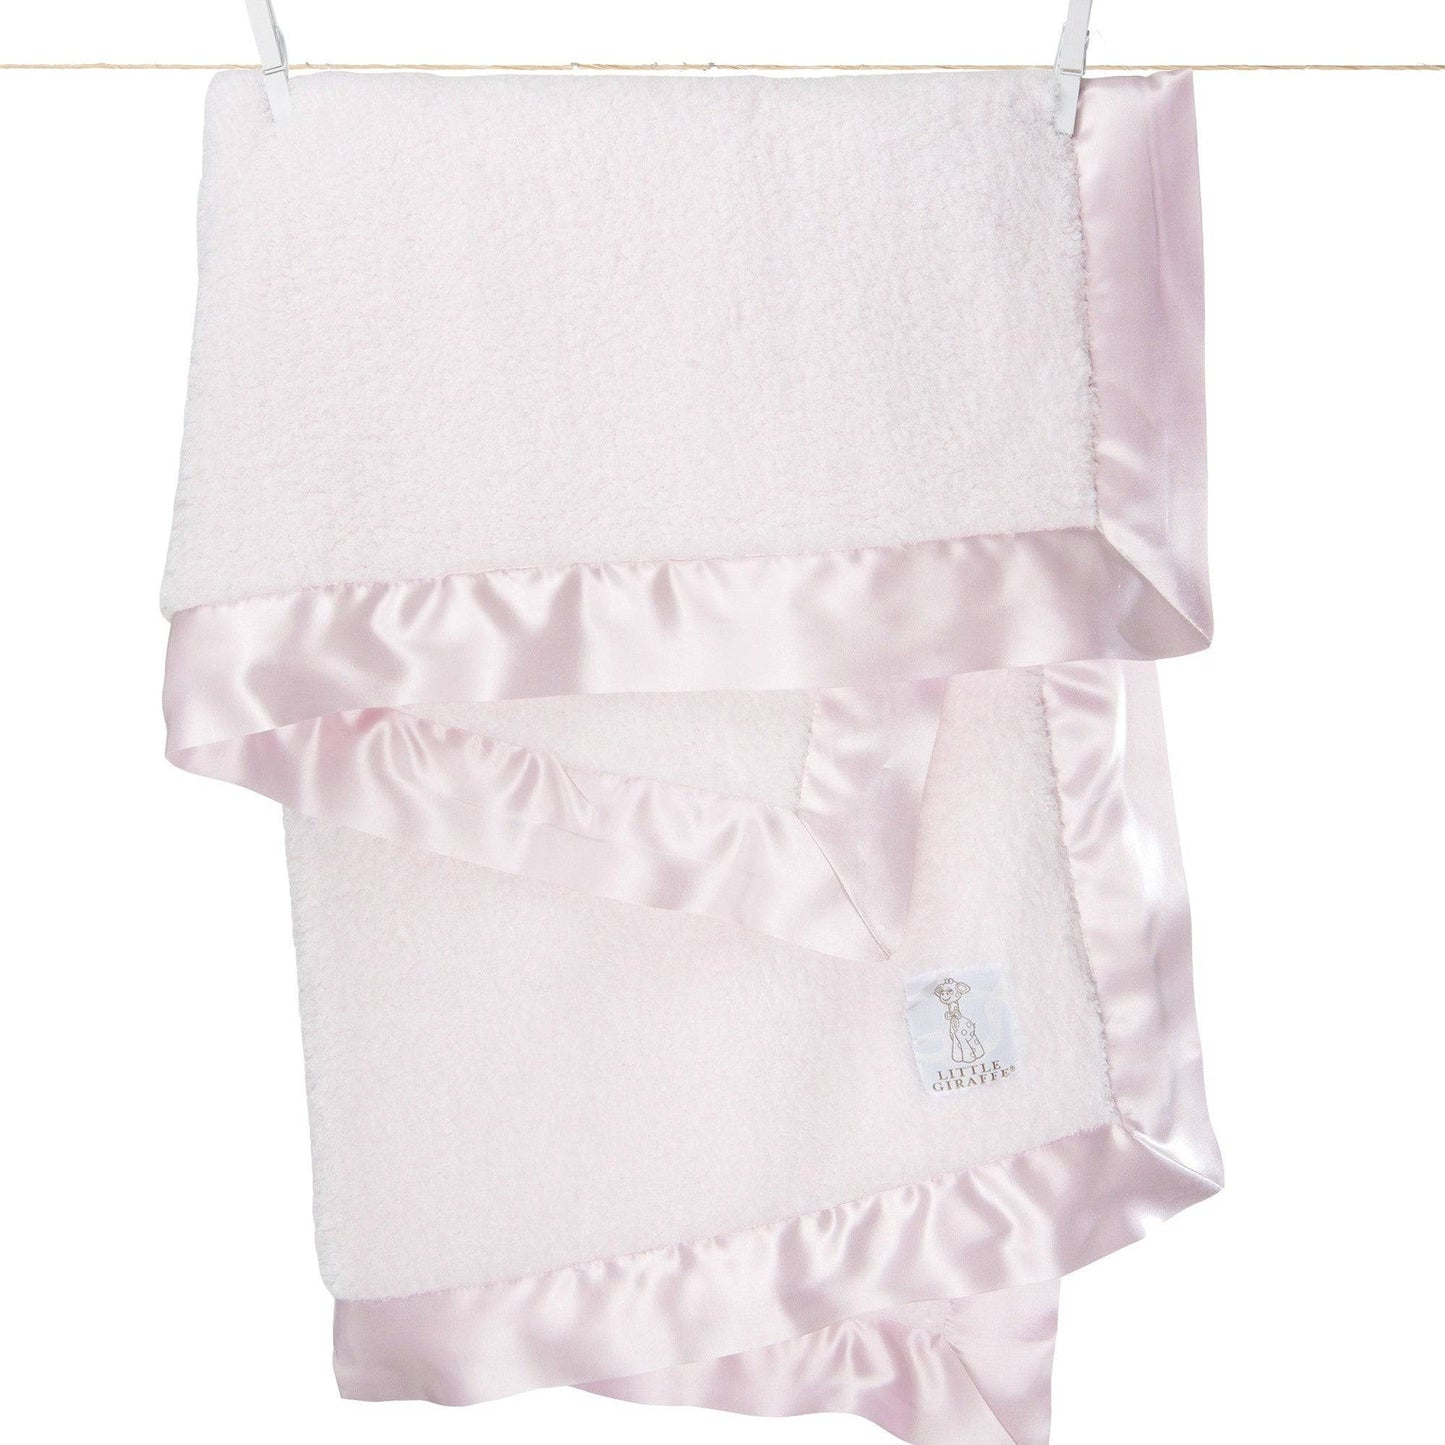 Chenille Baby Blanket Pink - Findlay Rowe Designs